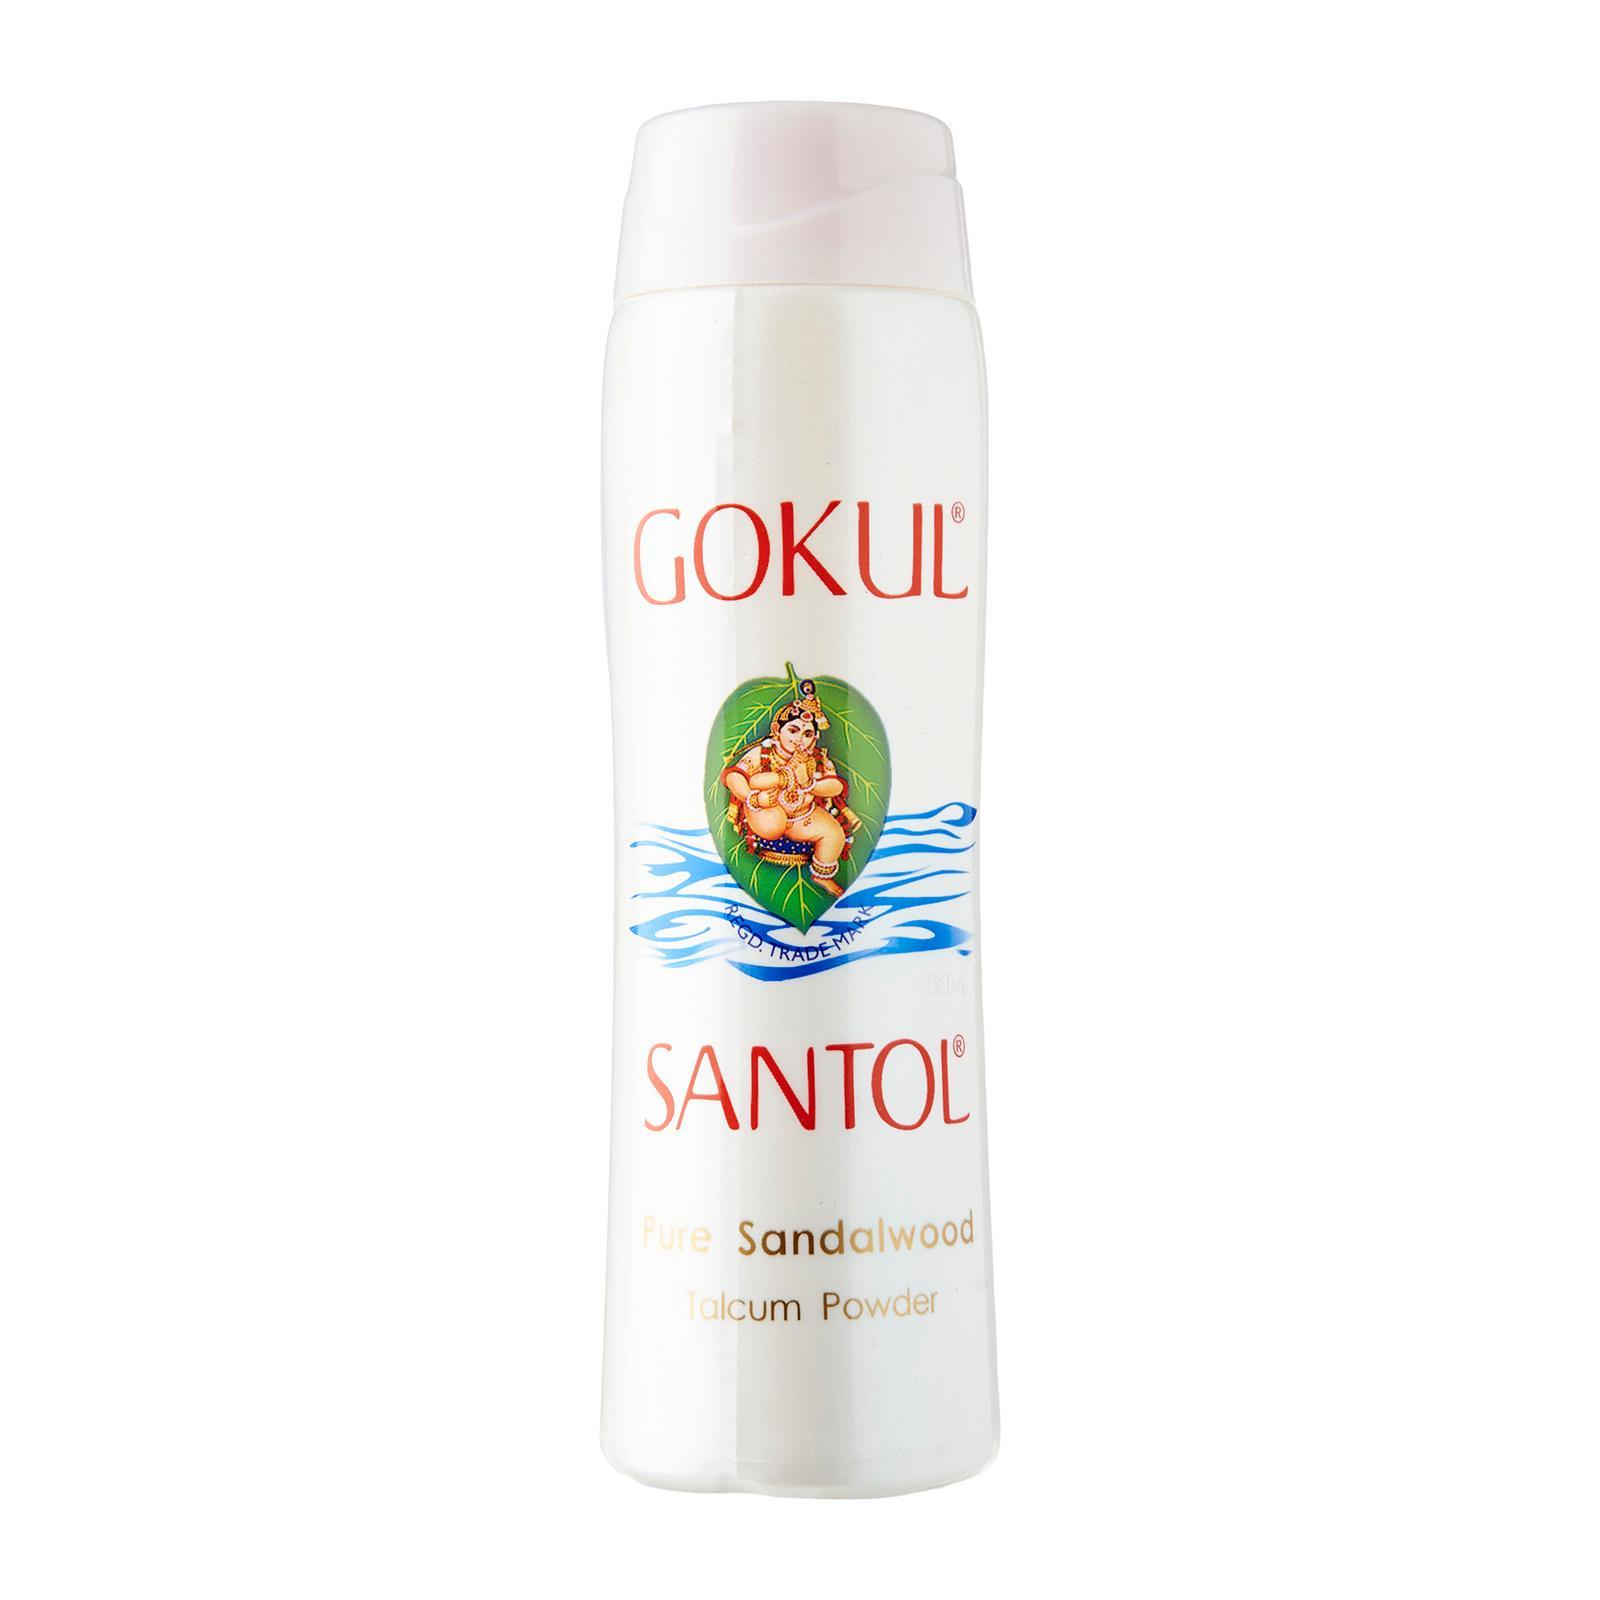 Gokul Santol Sandalwood Talcum Powder, 300 gm Price, Uses, Side Effects,  Composition - Apollo Pharmacy